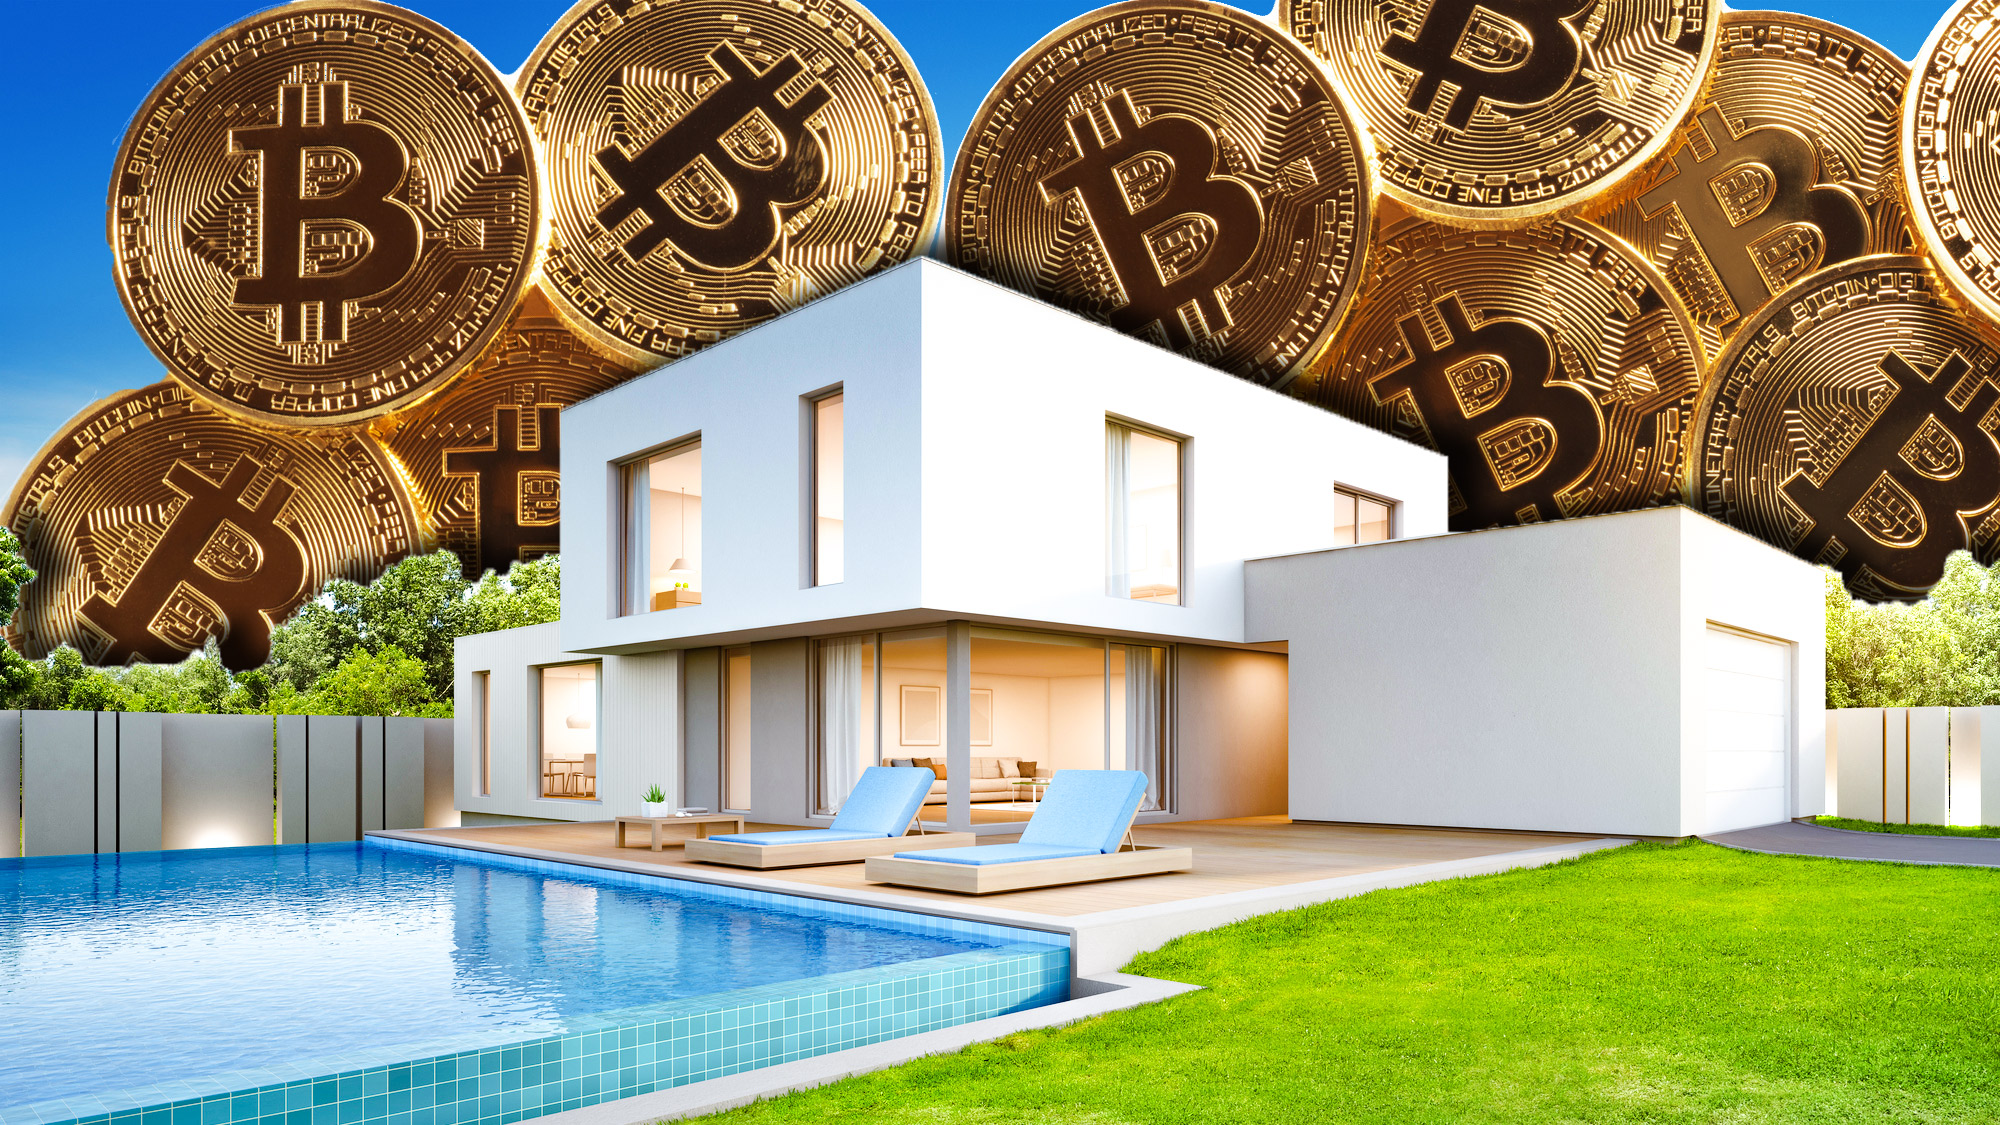 buy santa monica real estate with bitcoin